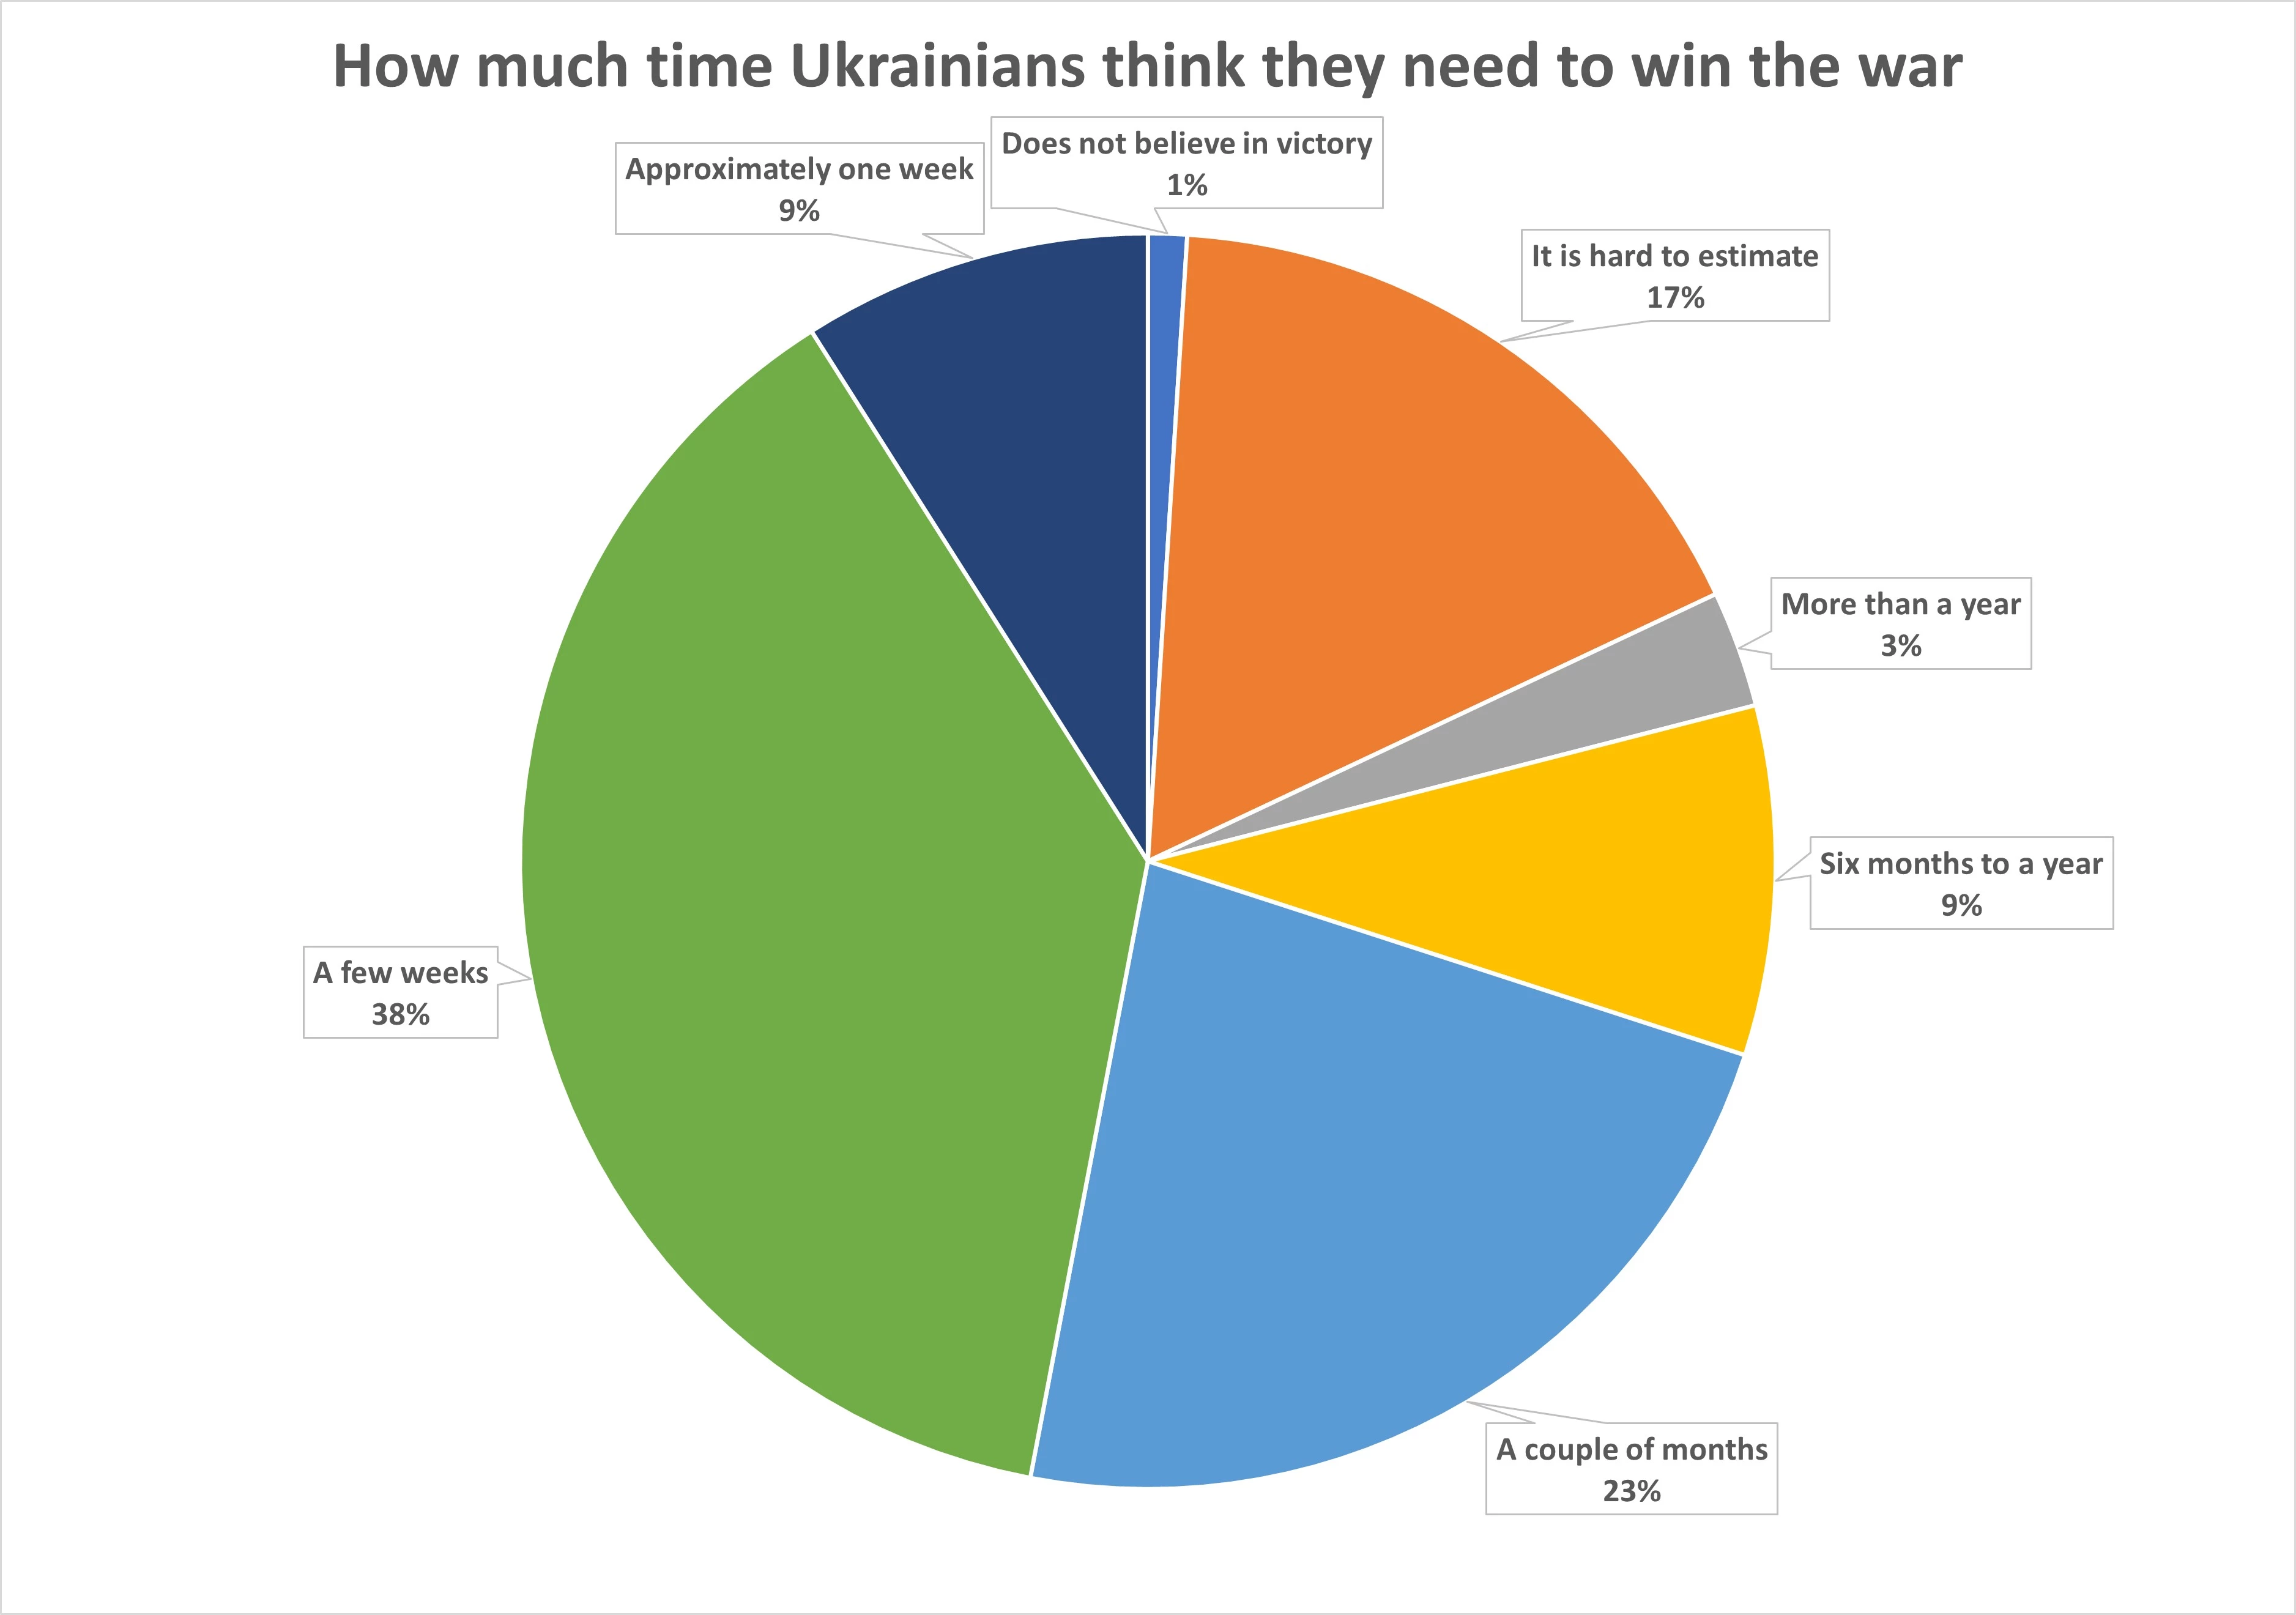 Ukrainians think they need to win